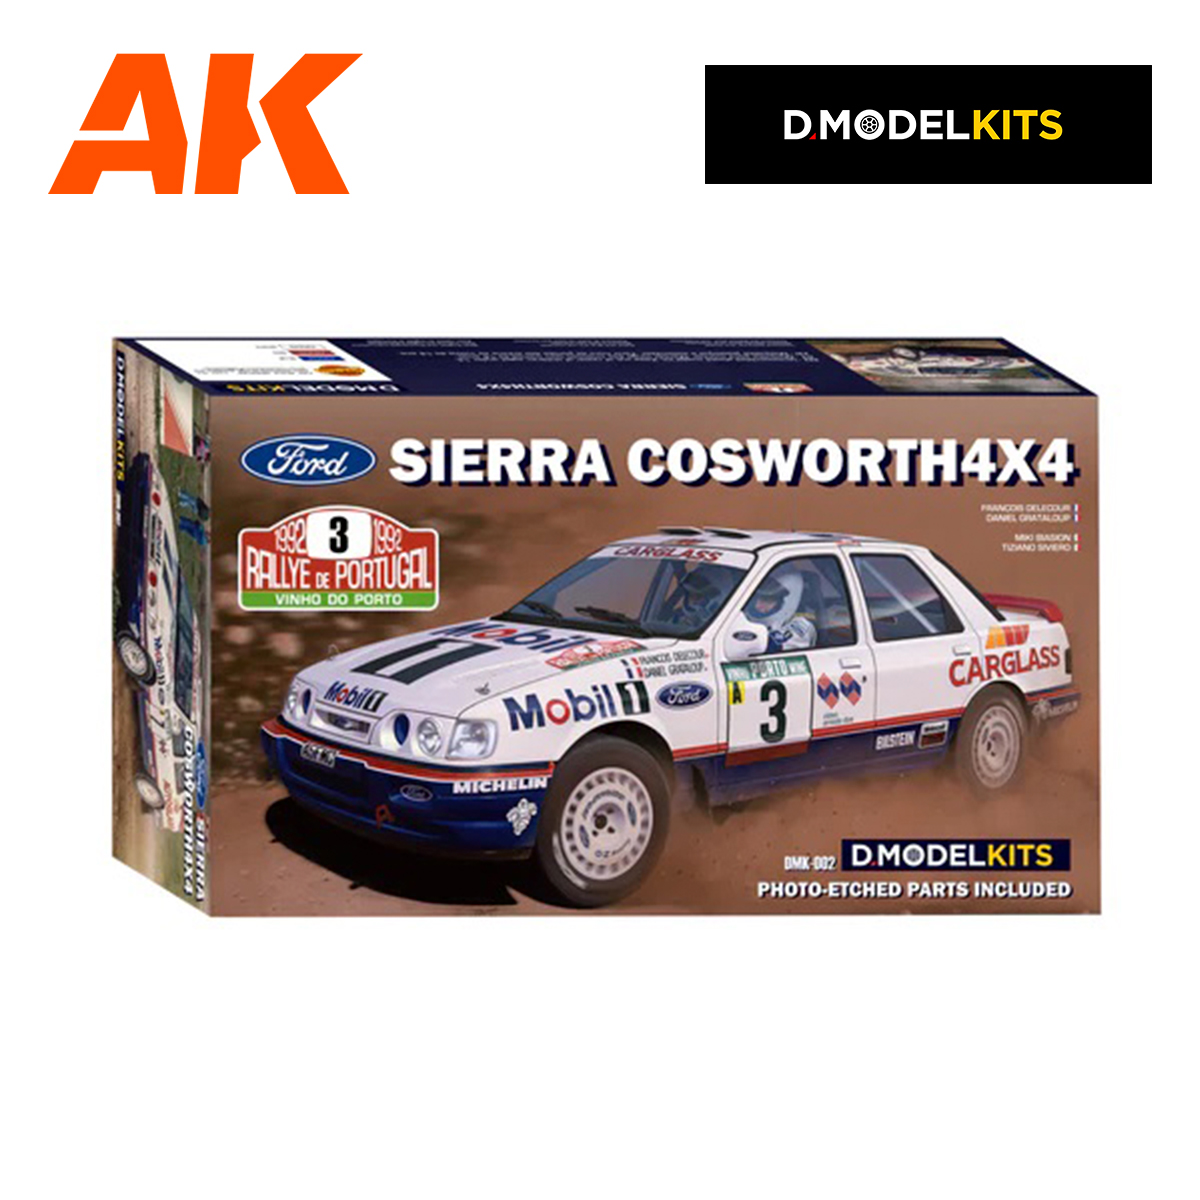 Ford Sierra Cosworth 4×4 Rally de Portugal 1991 1/24